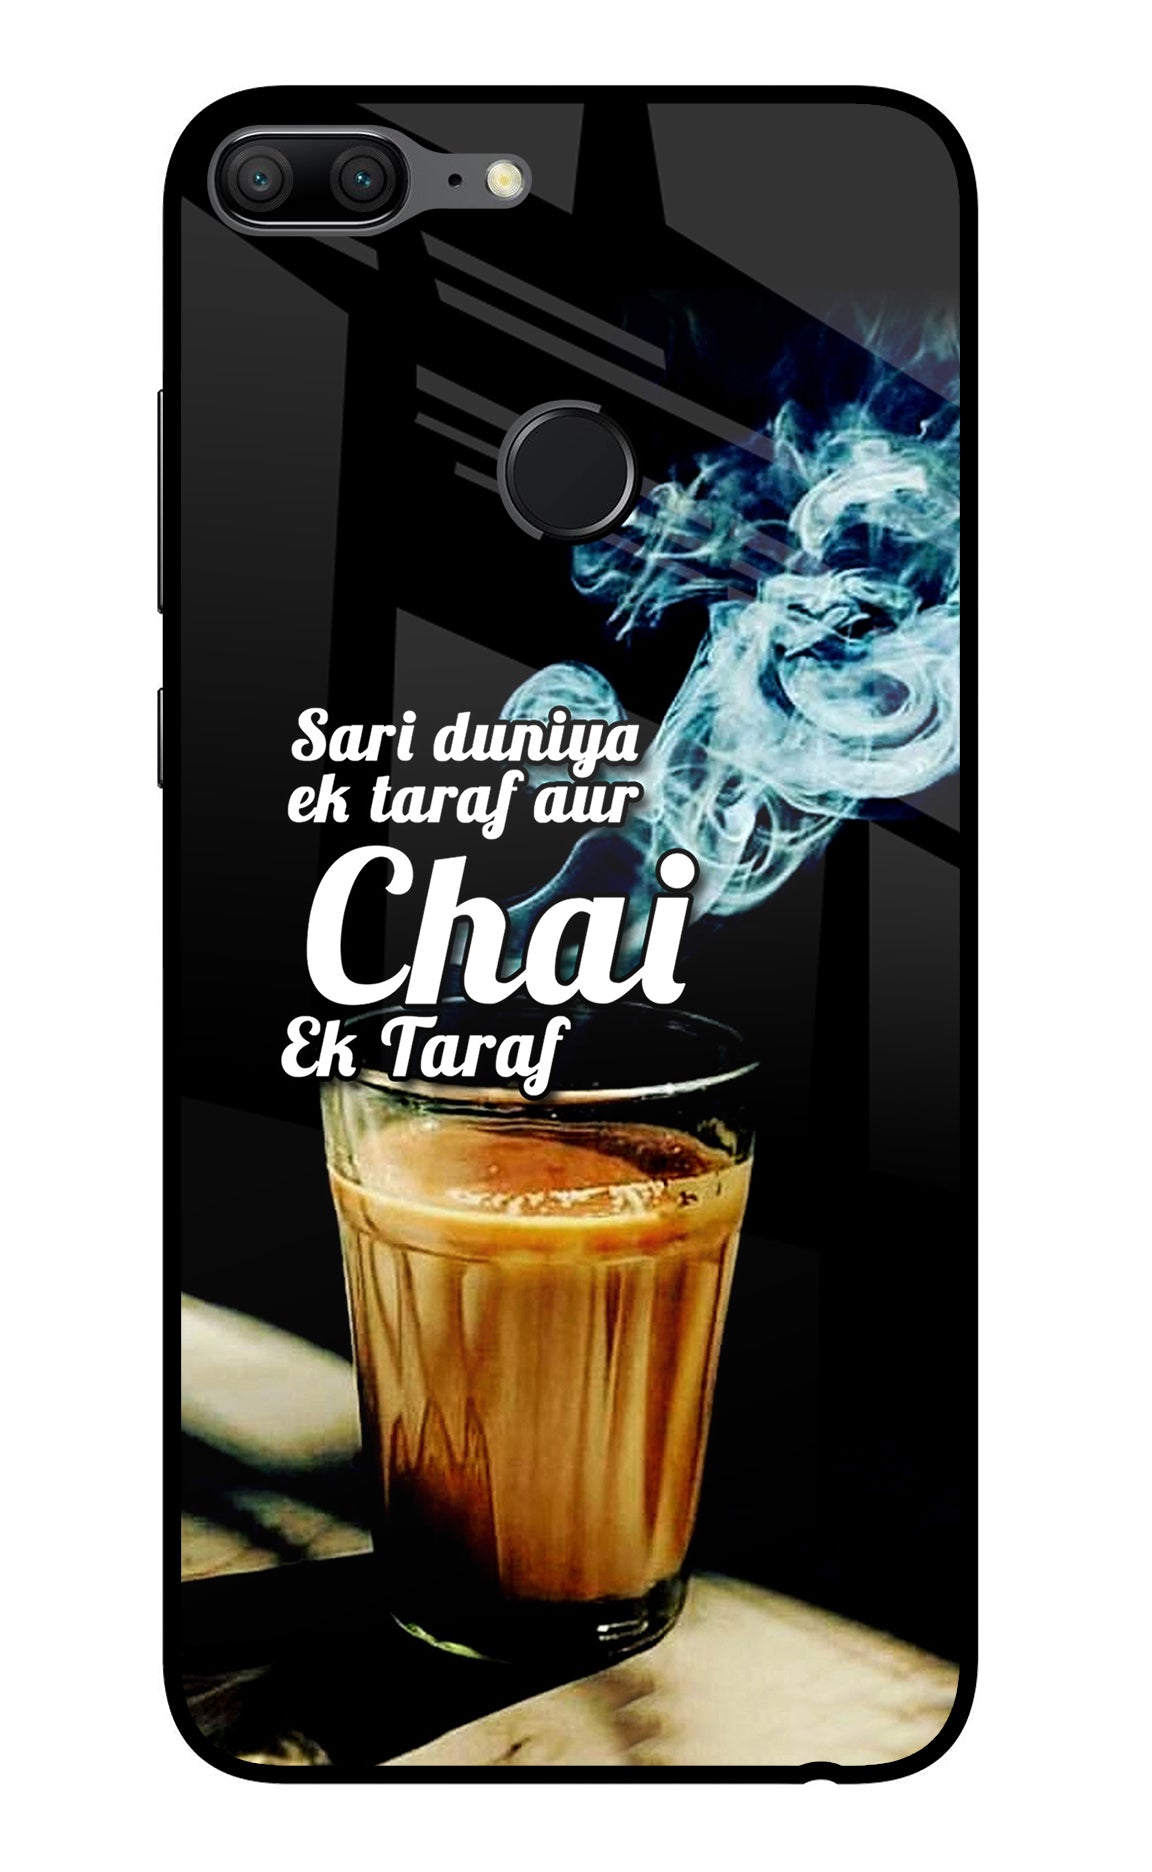 Chai Ek Taraf Quote Honor 9 Lite Glass Case